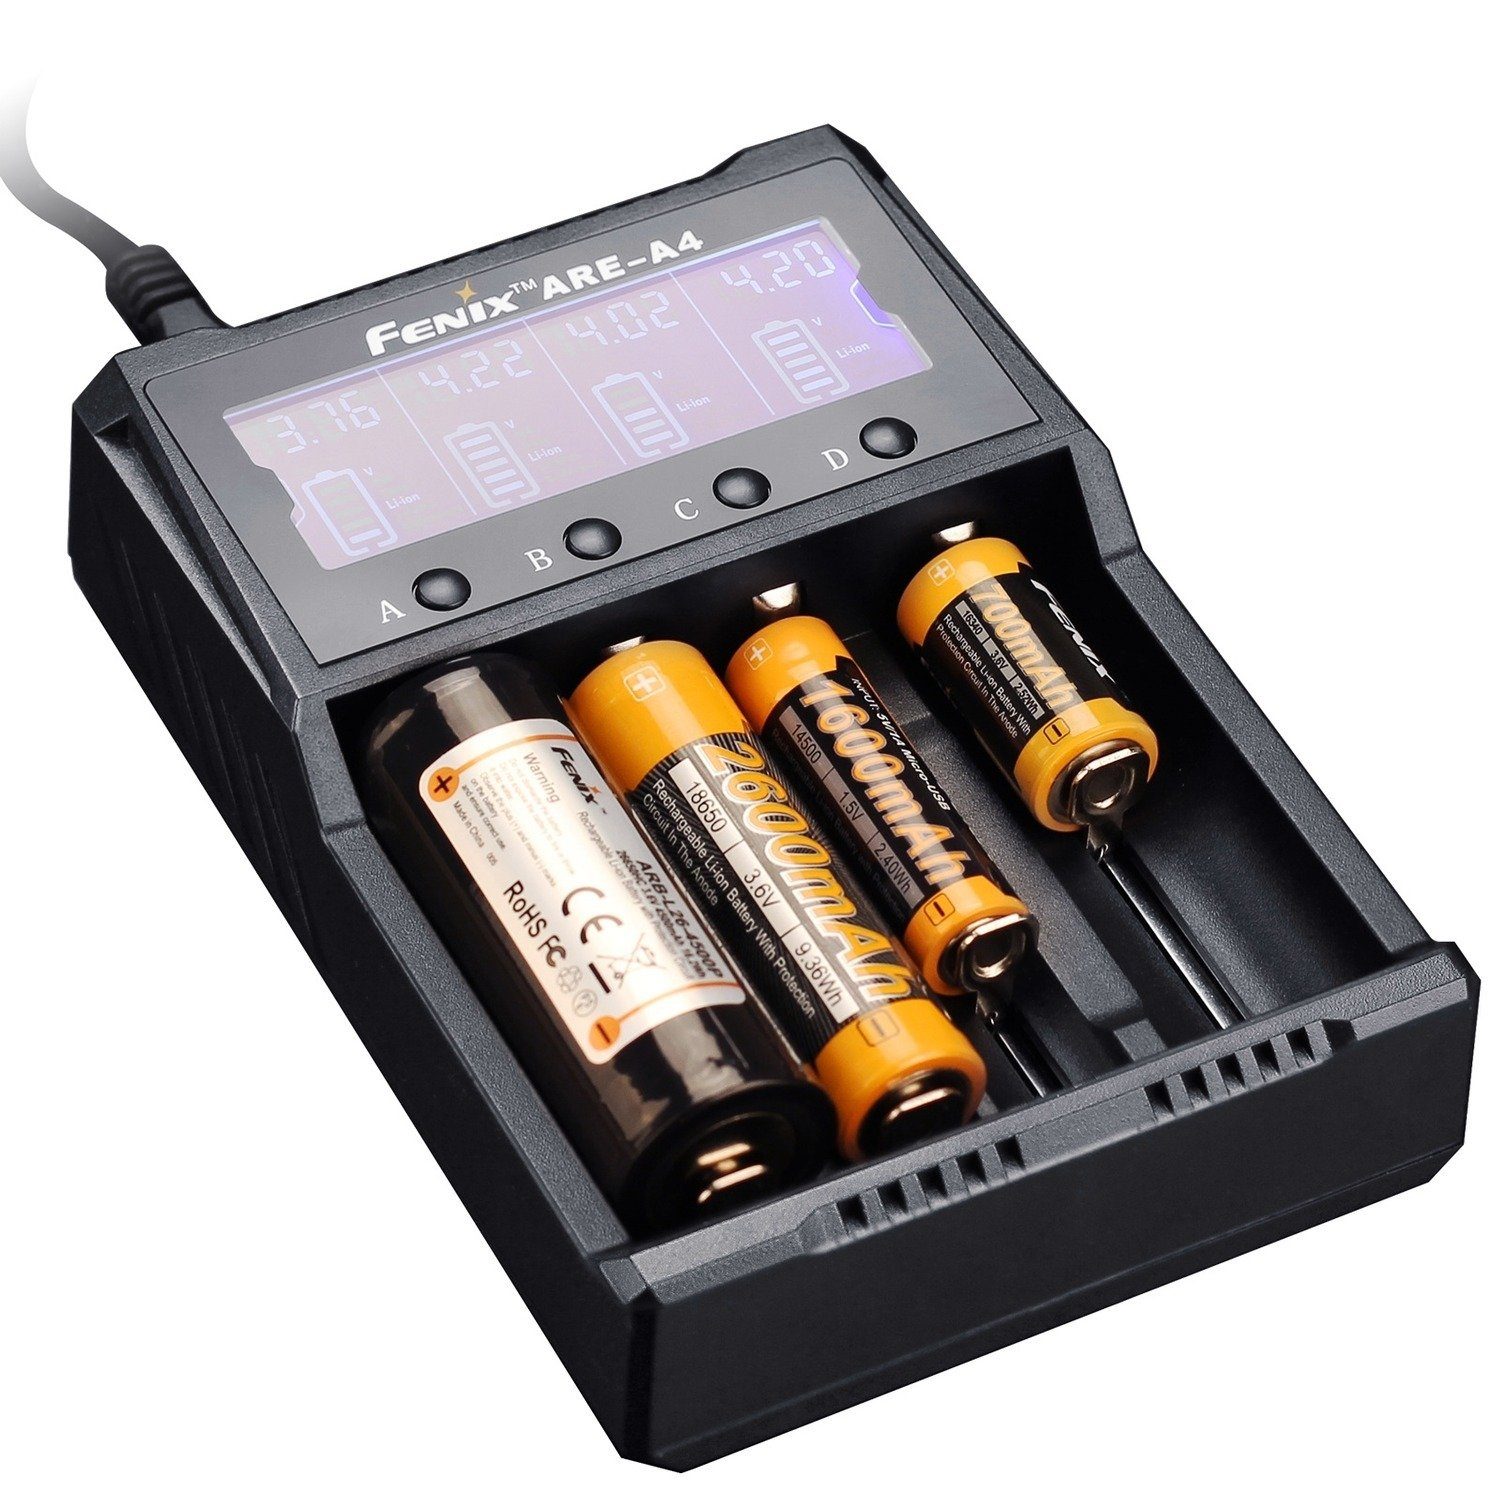 Akku-Ladestation Batterien Fenix ARE-A4 Ladegerät für